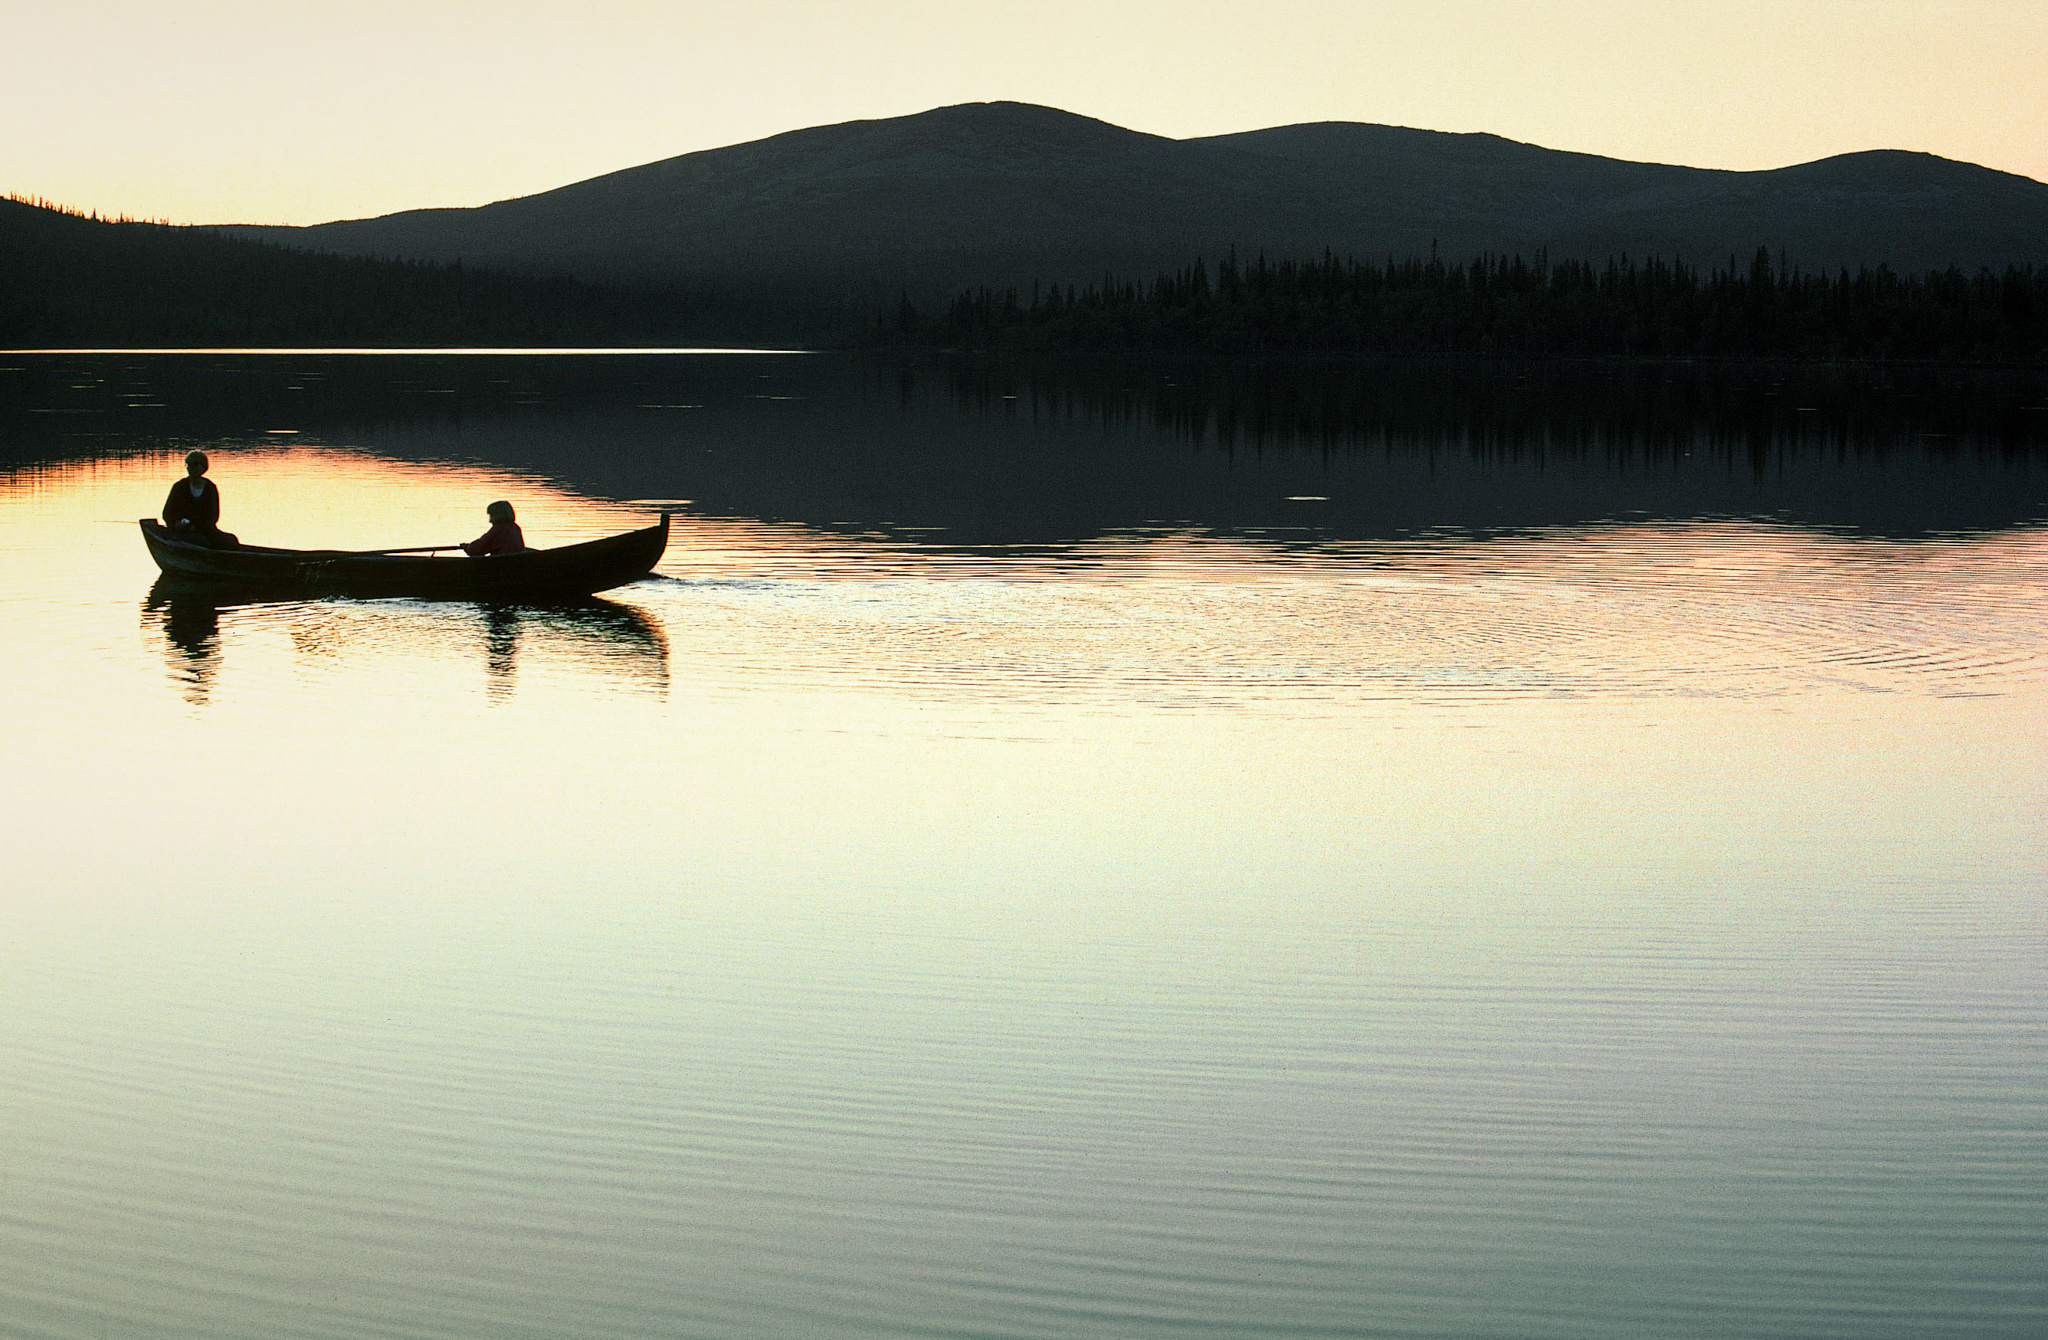 two people paddling in kanu on lake in evening